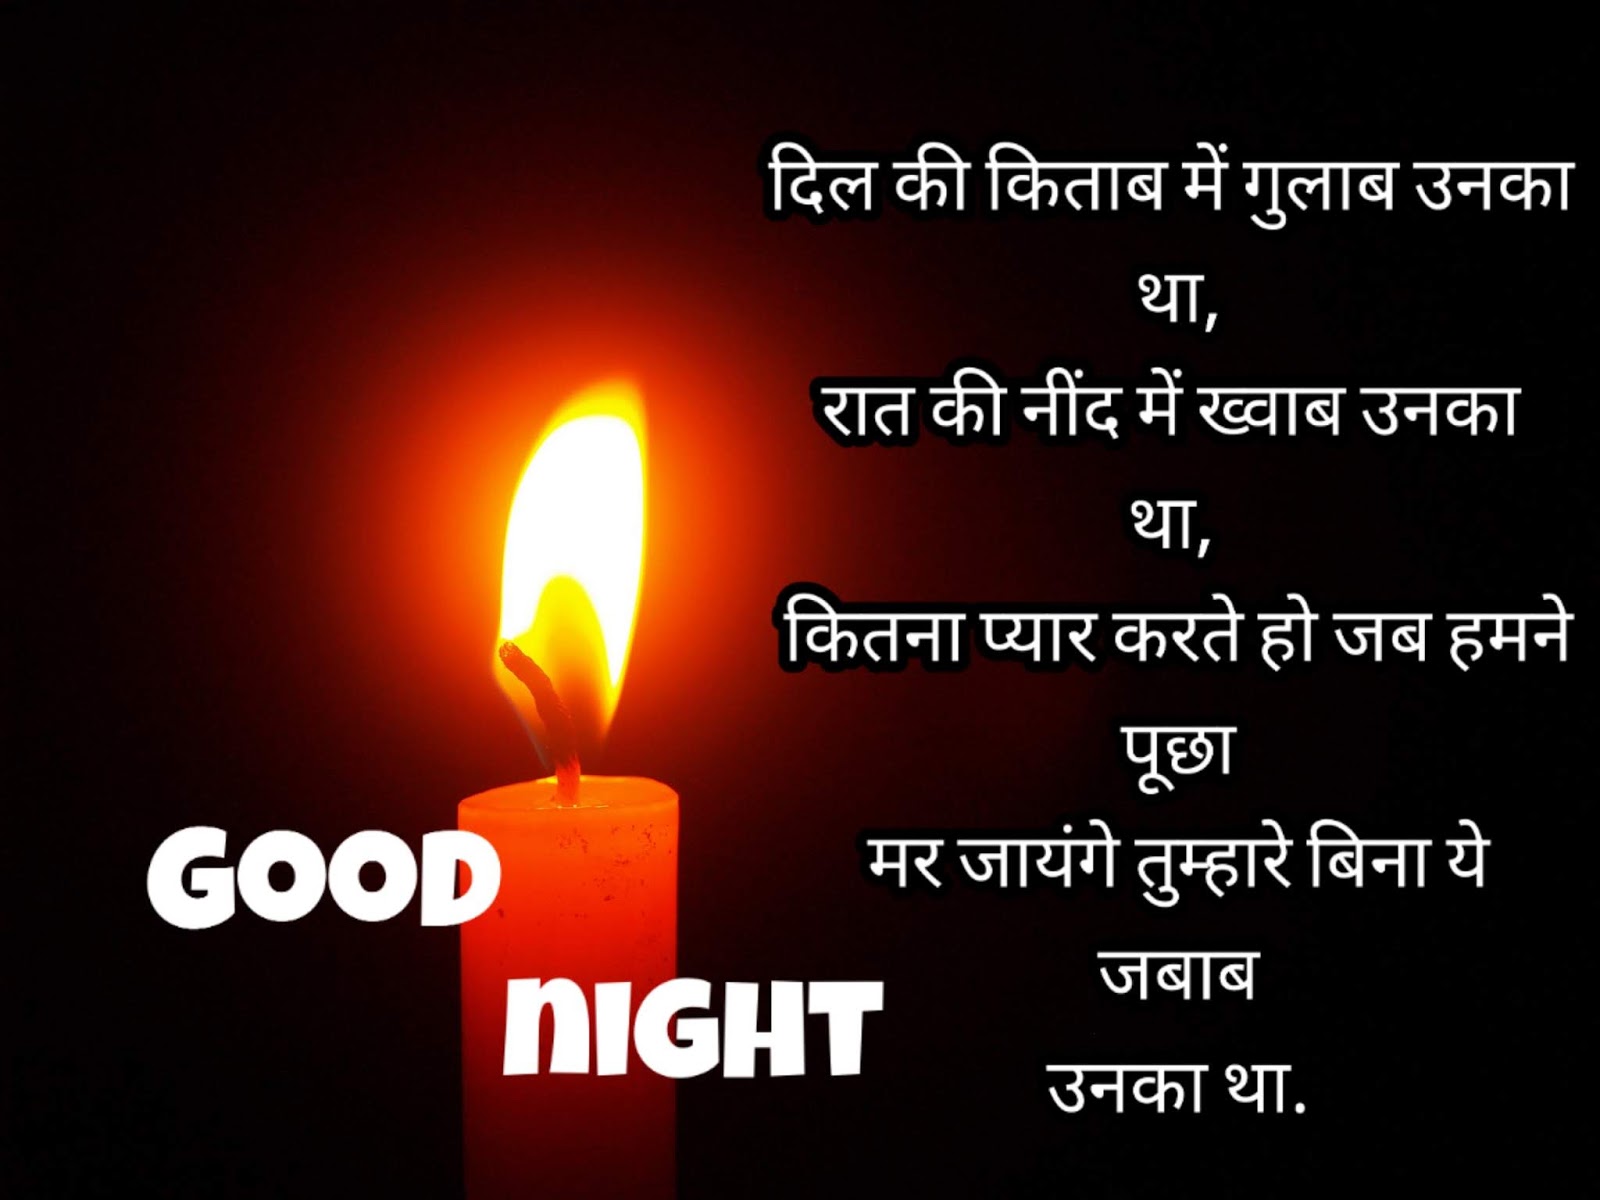 Good night hindi sayari Images for HD free download,status